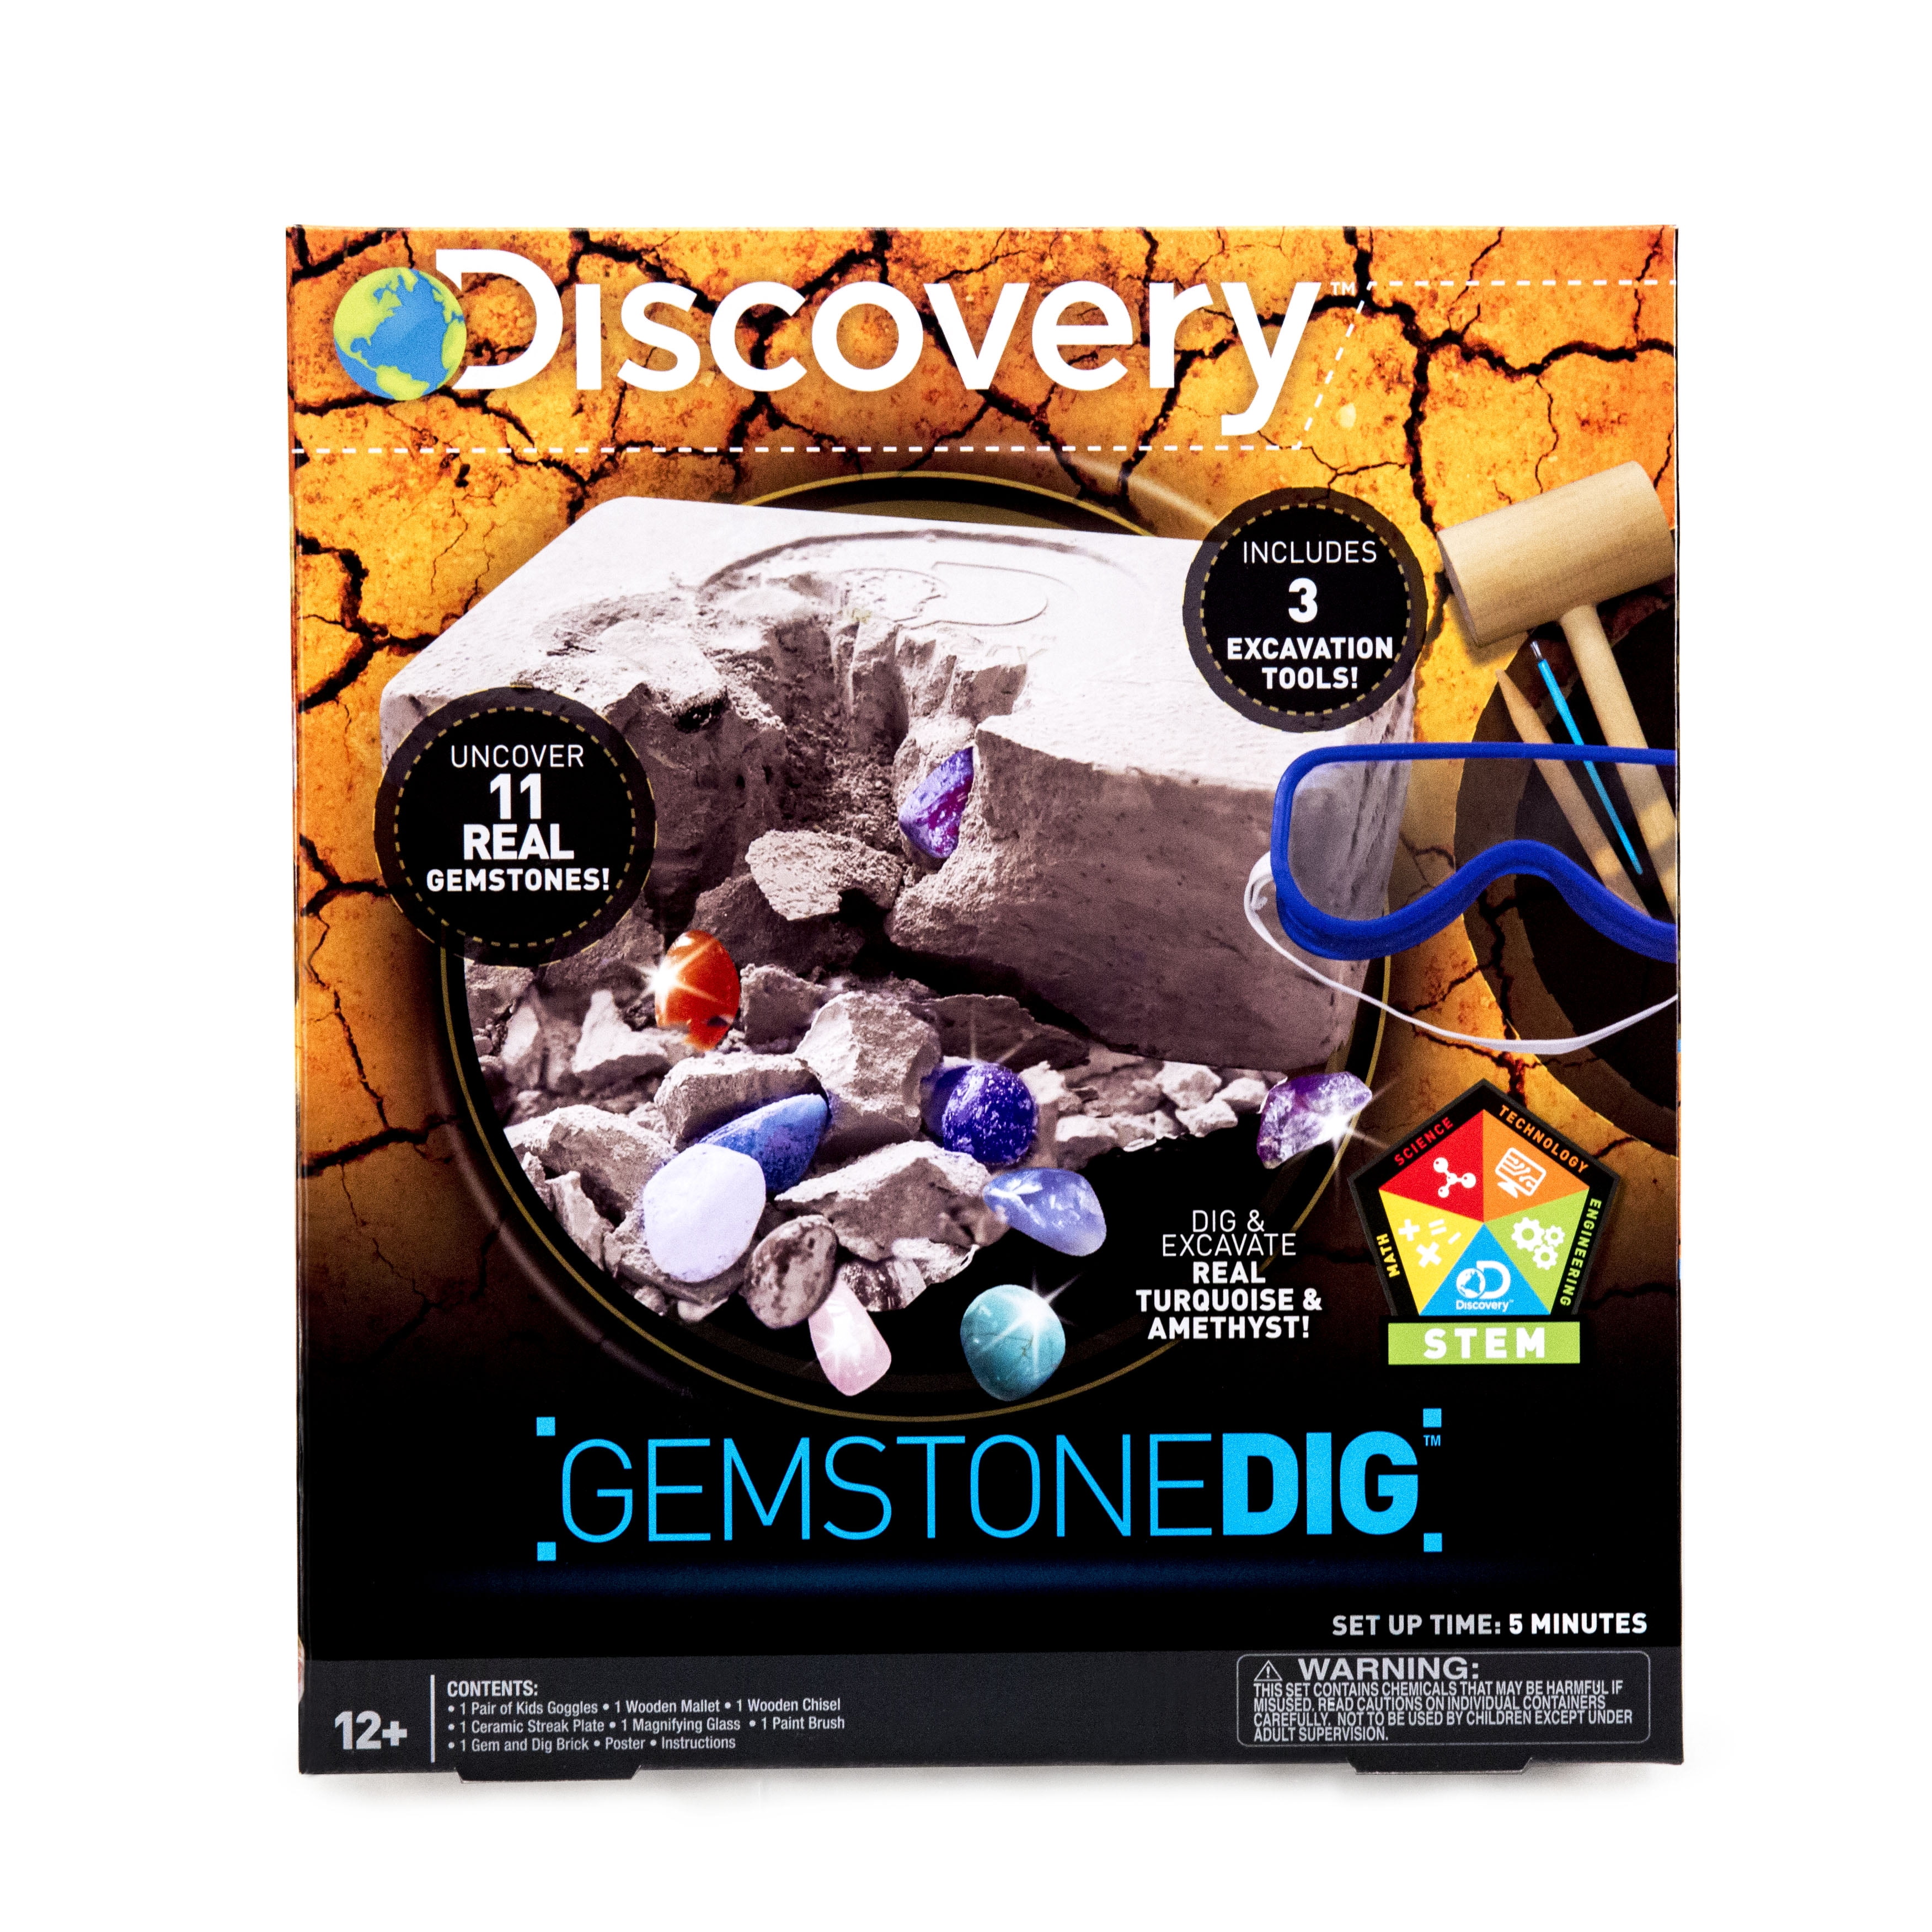 Excavation GemStones Dig Kit for Kids Natural Rocks Mineral Mining Science Education Stem Gift for Party 12 Packs